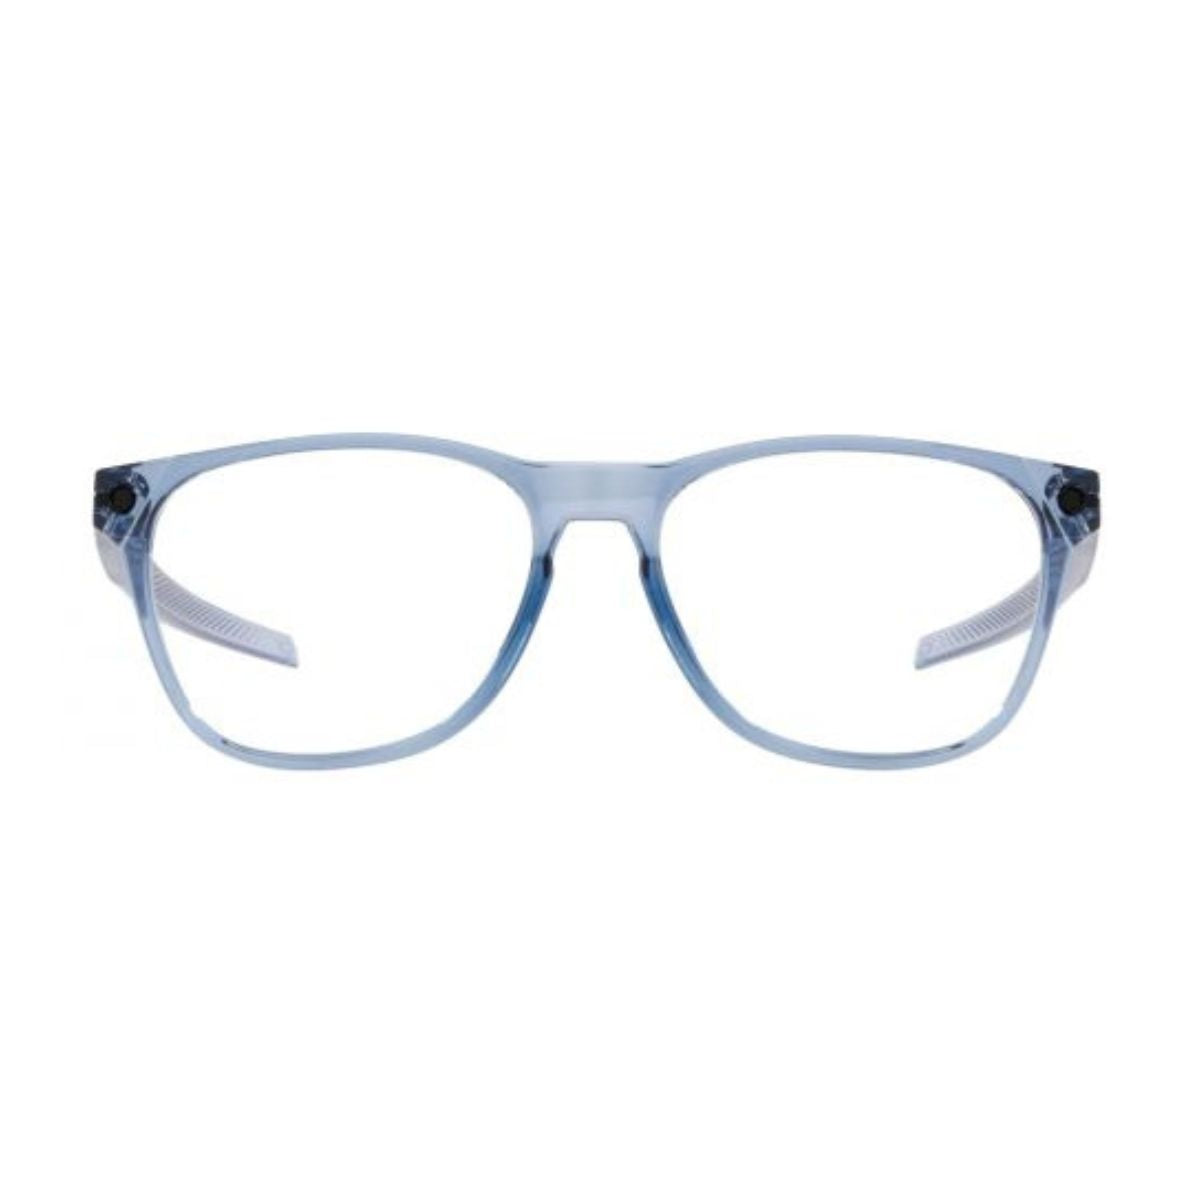 "shop Oakley 8177 0654 aviator eyeglasses frame for men's at optorium"